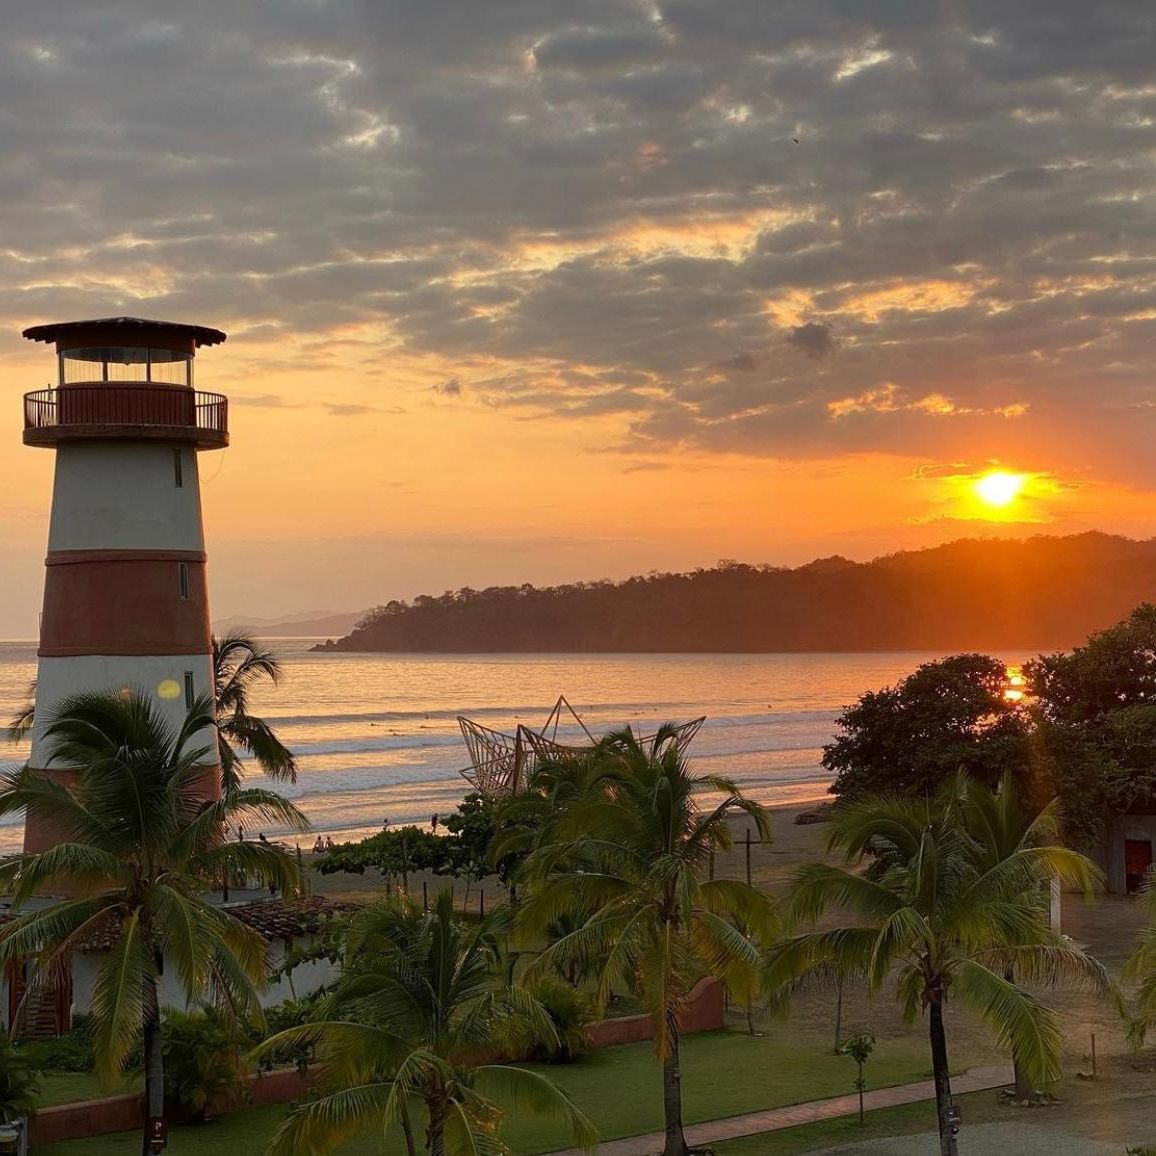 Download ITAI - Venao Sunset | September 2021 (El-Sitio, Panama)